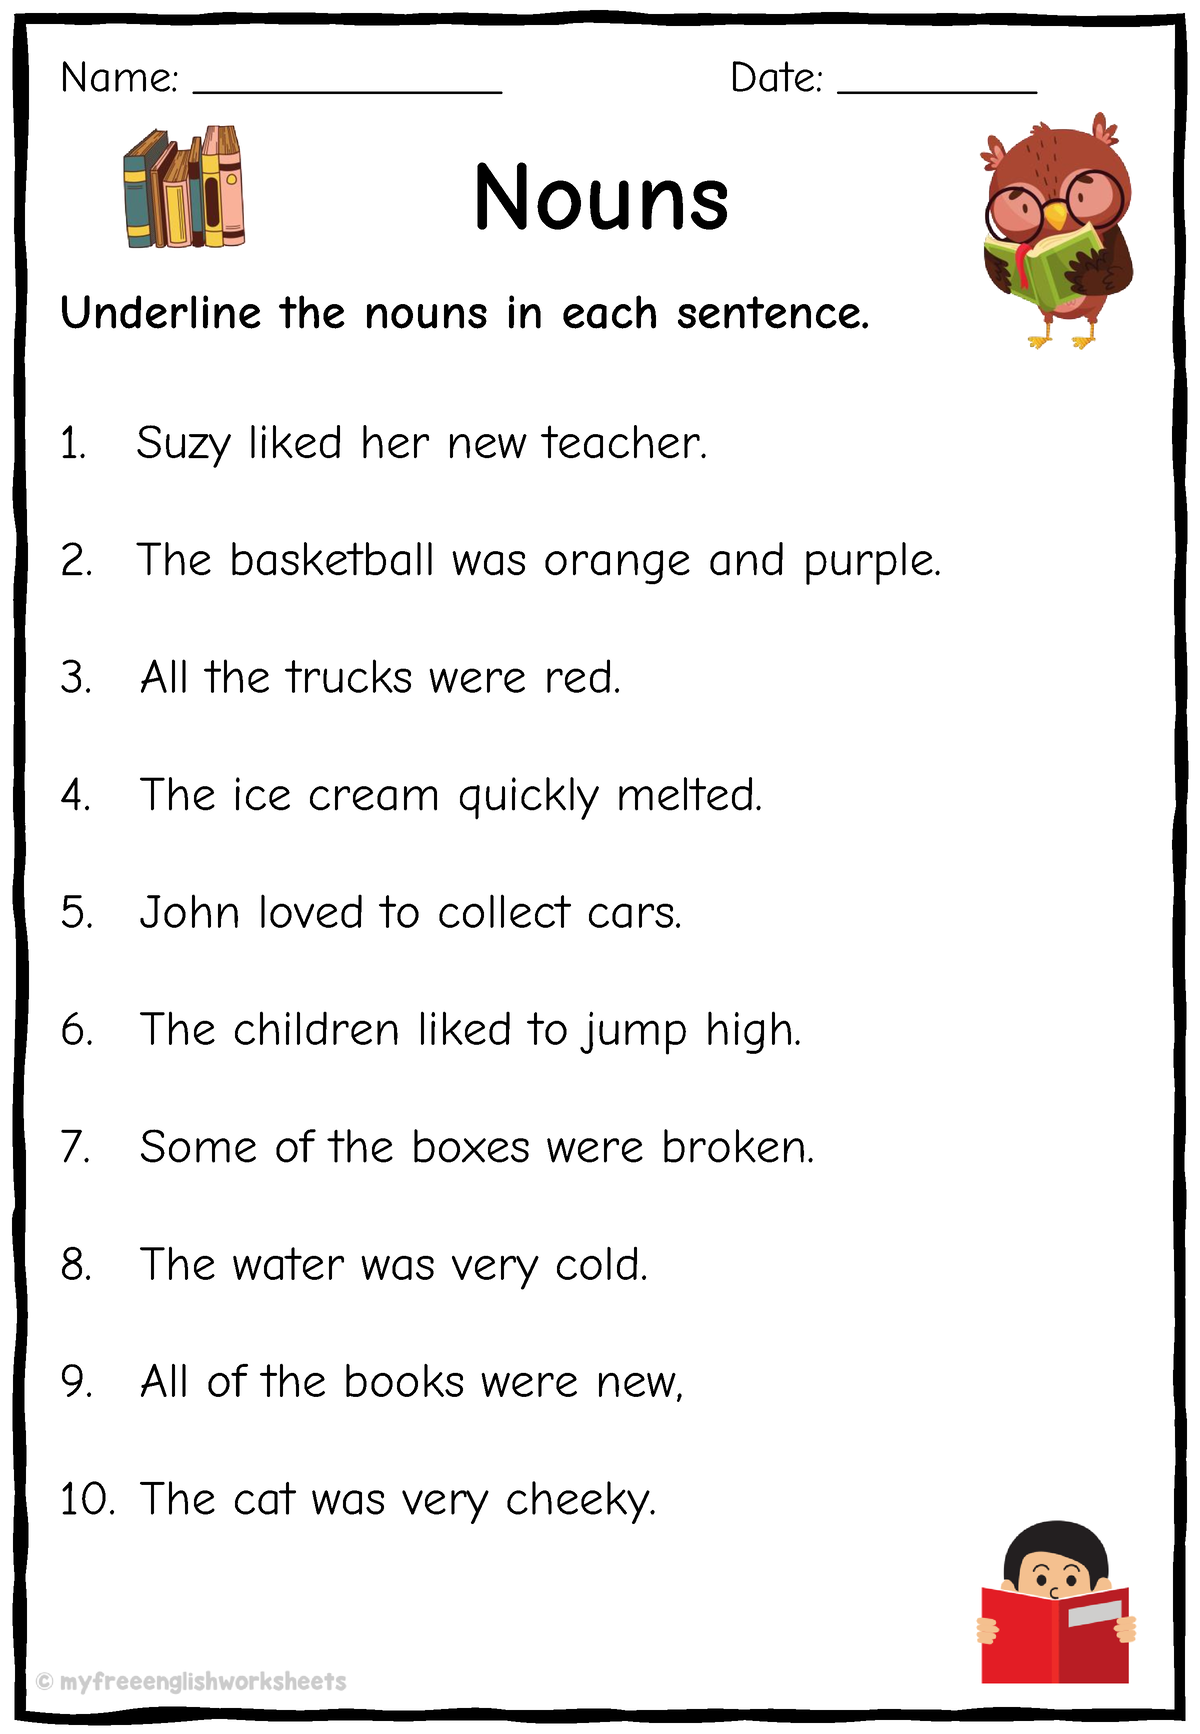 noun-worksheet-2-underline-the-noun-nouns-underline-the-nouns-in-each